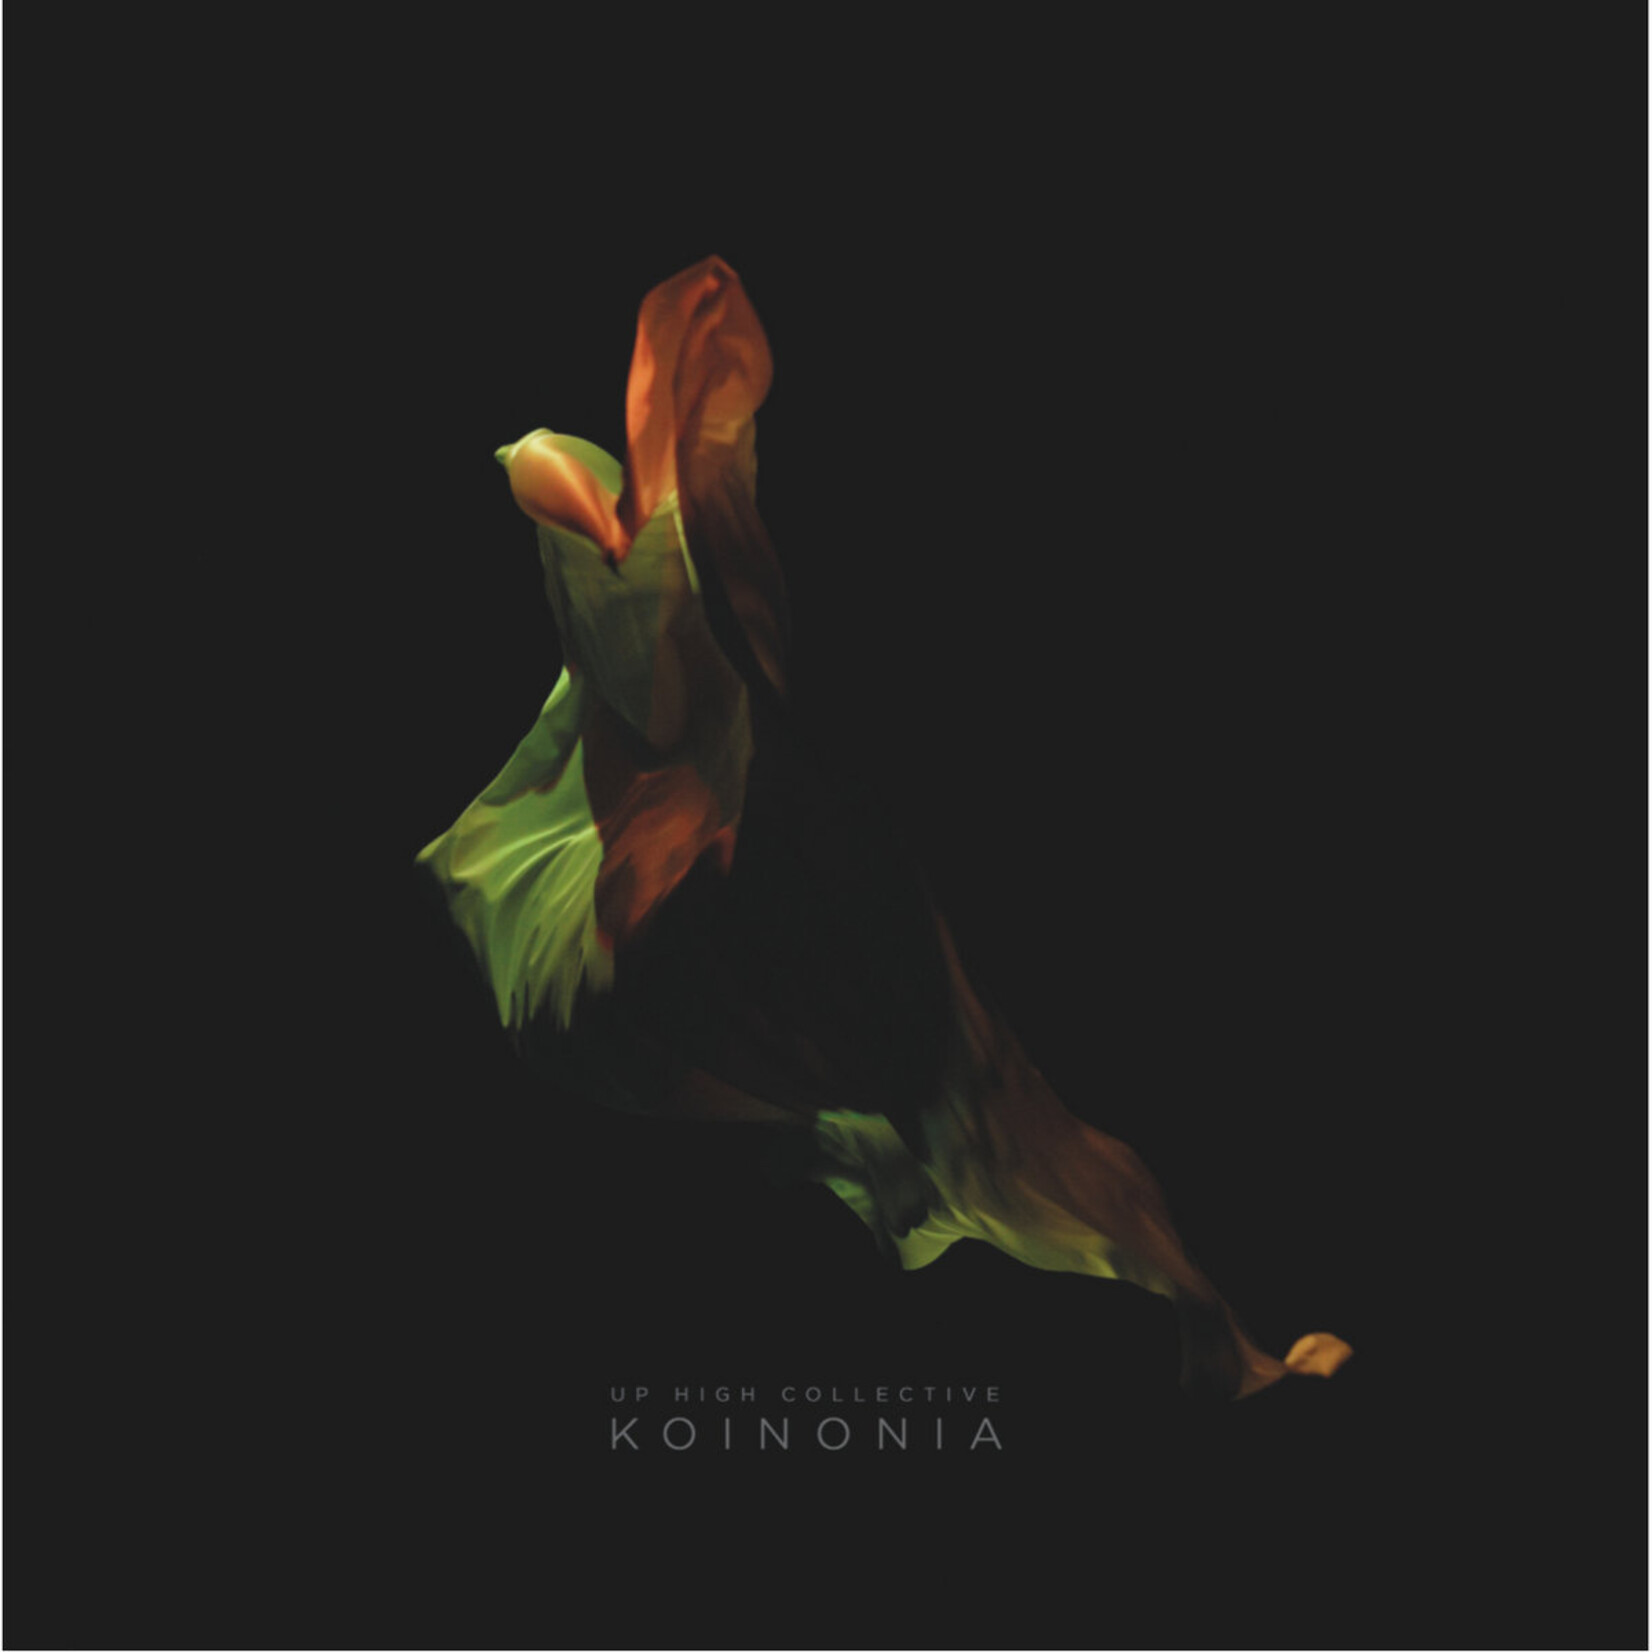 Up High Collective – Koinonia